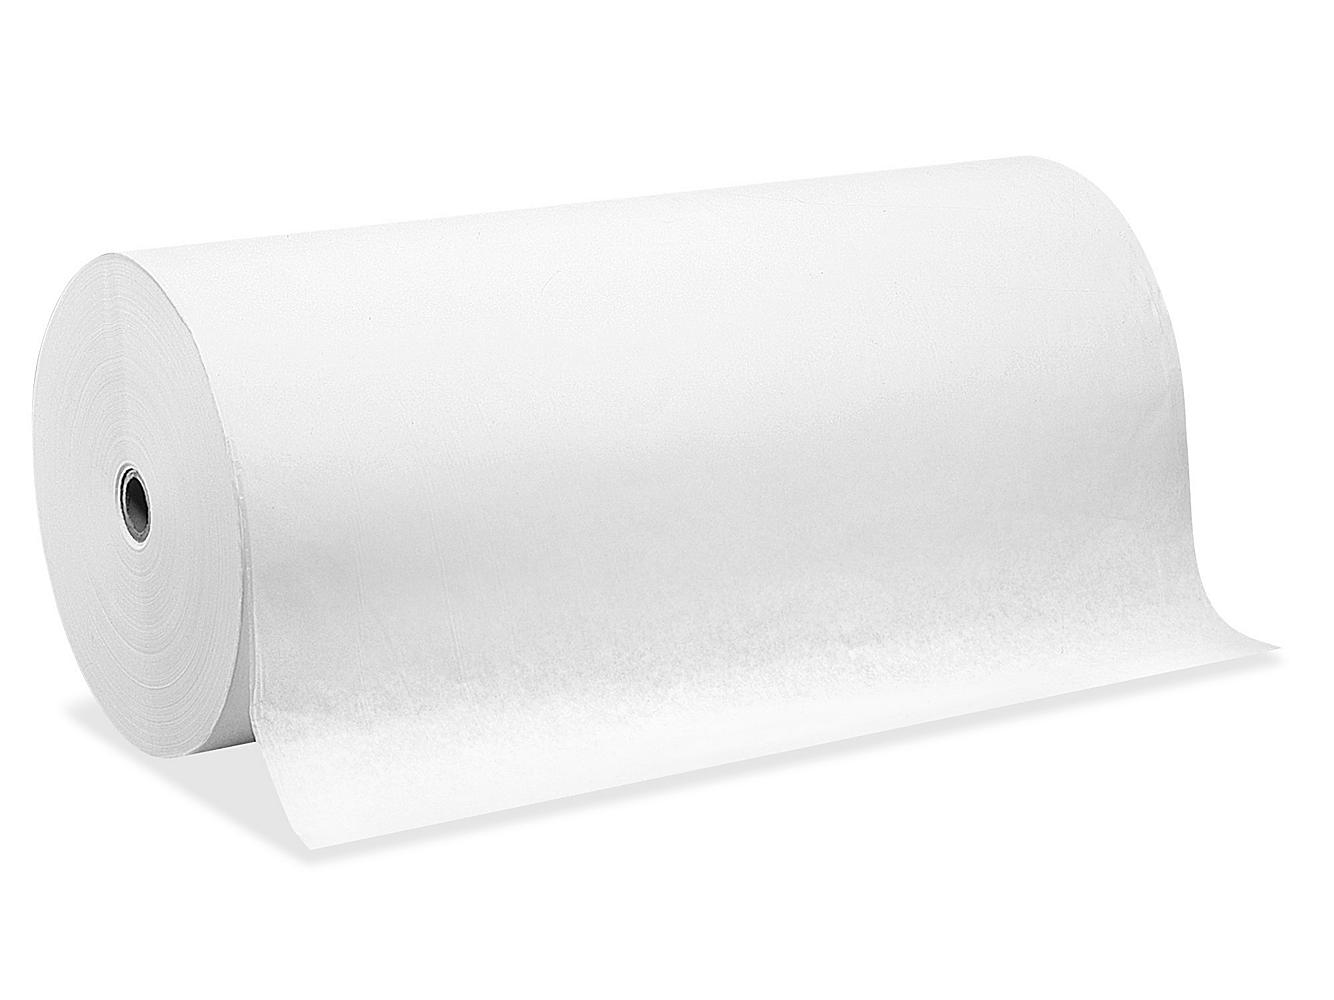 Gift Grade Tissue Paper Rolls in Stock - ULINE